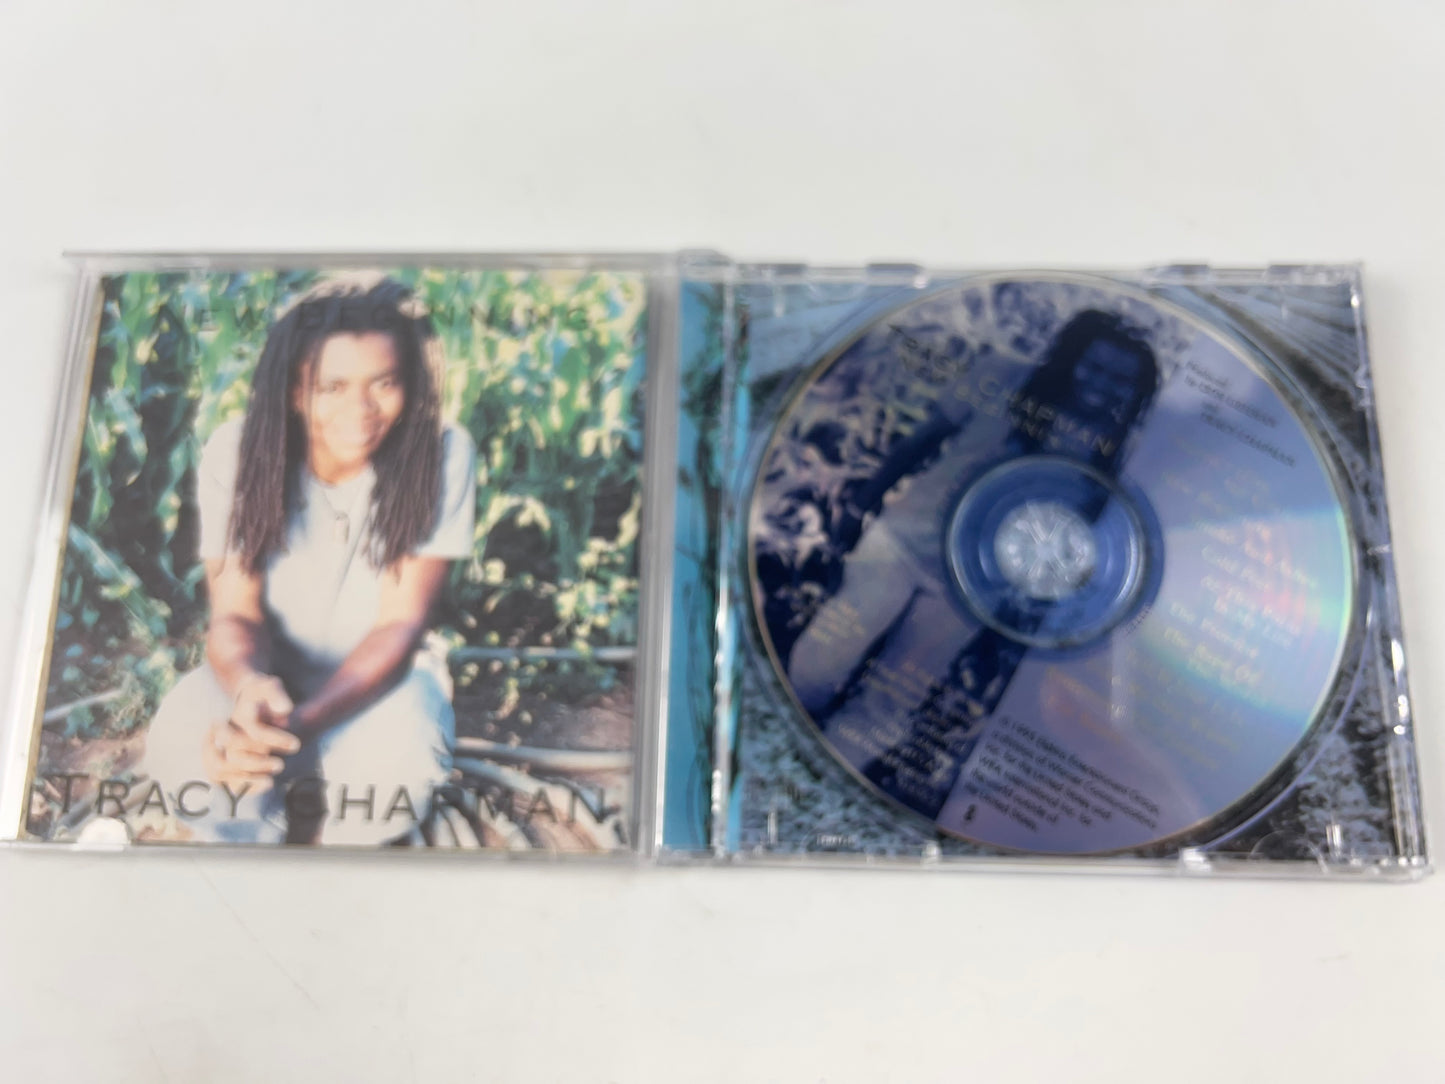 Tracy Chapman - New Beginning (CD, 1995, Elektra (Label))